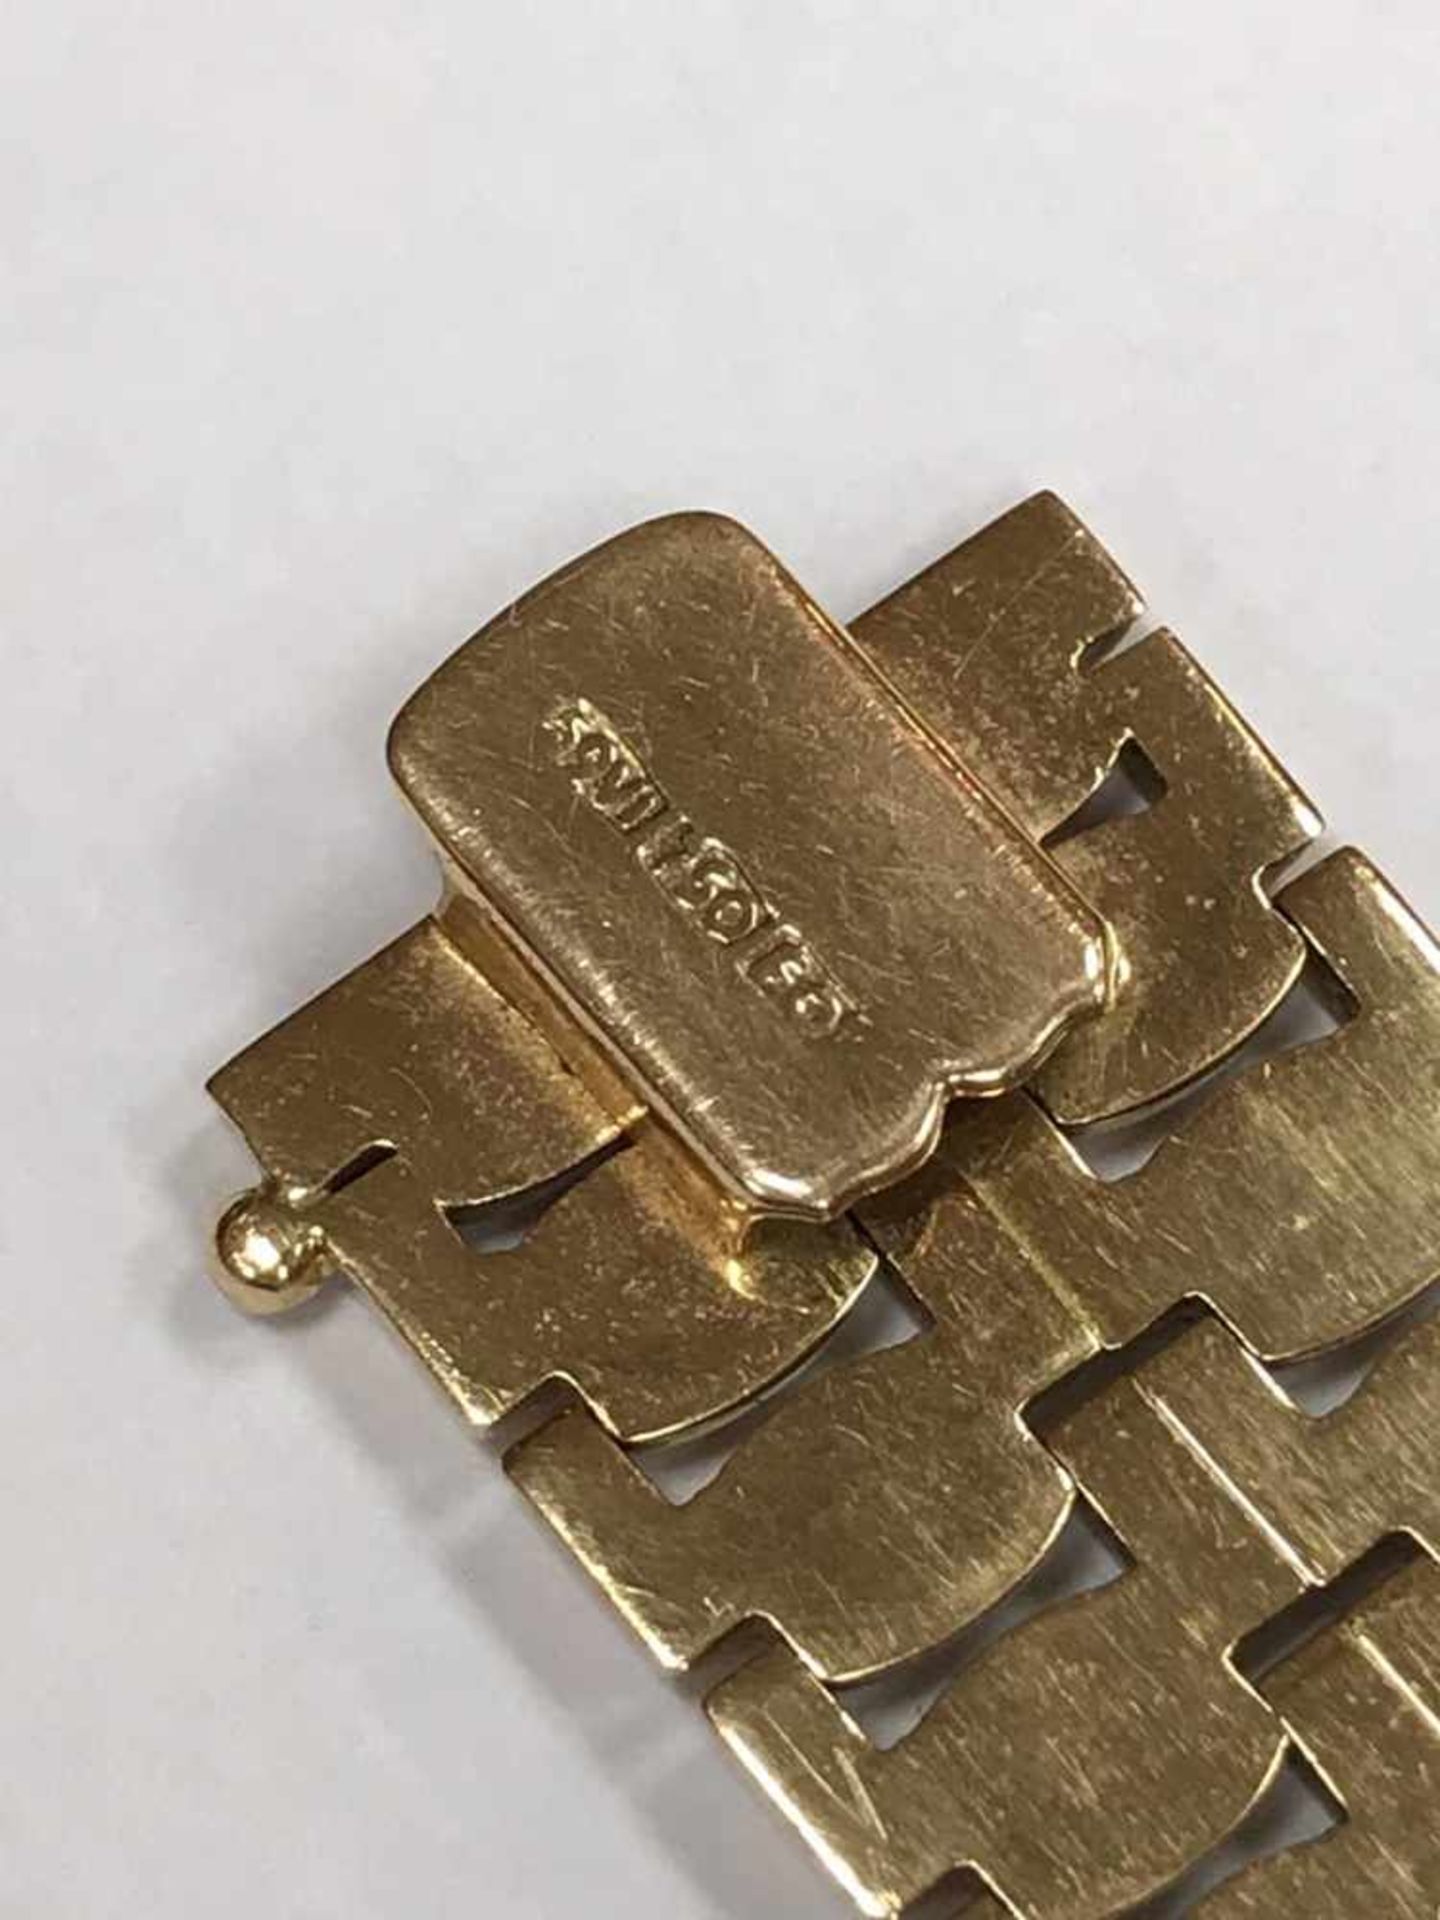 Goldarmband um 1950750 Gold , 2-reihiges Goldarmband, Alter um 1950, Maße: Länge 19,5 cm, Breite - Bild 3 aus 3